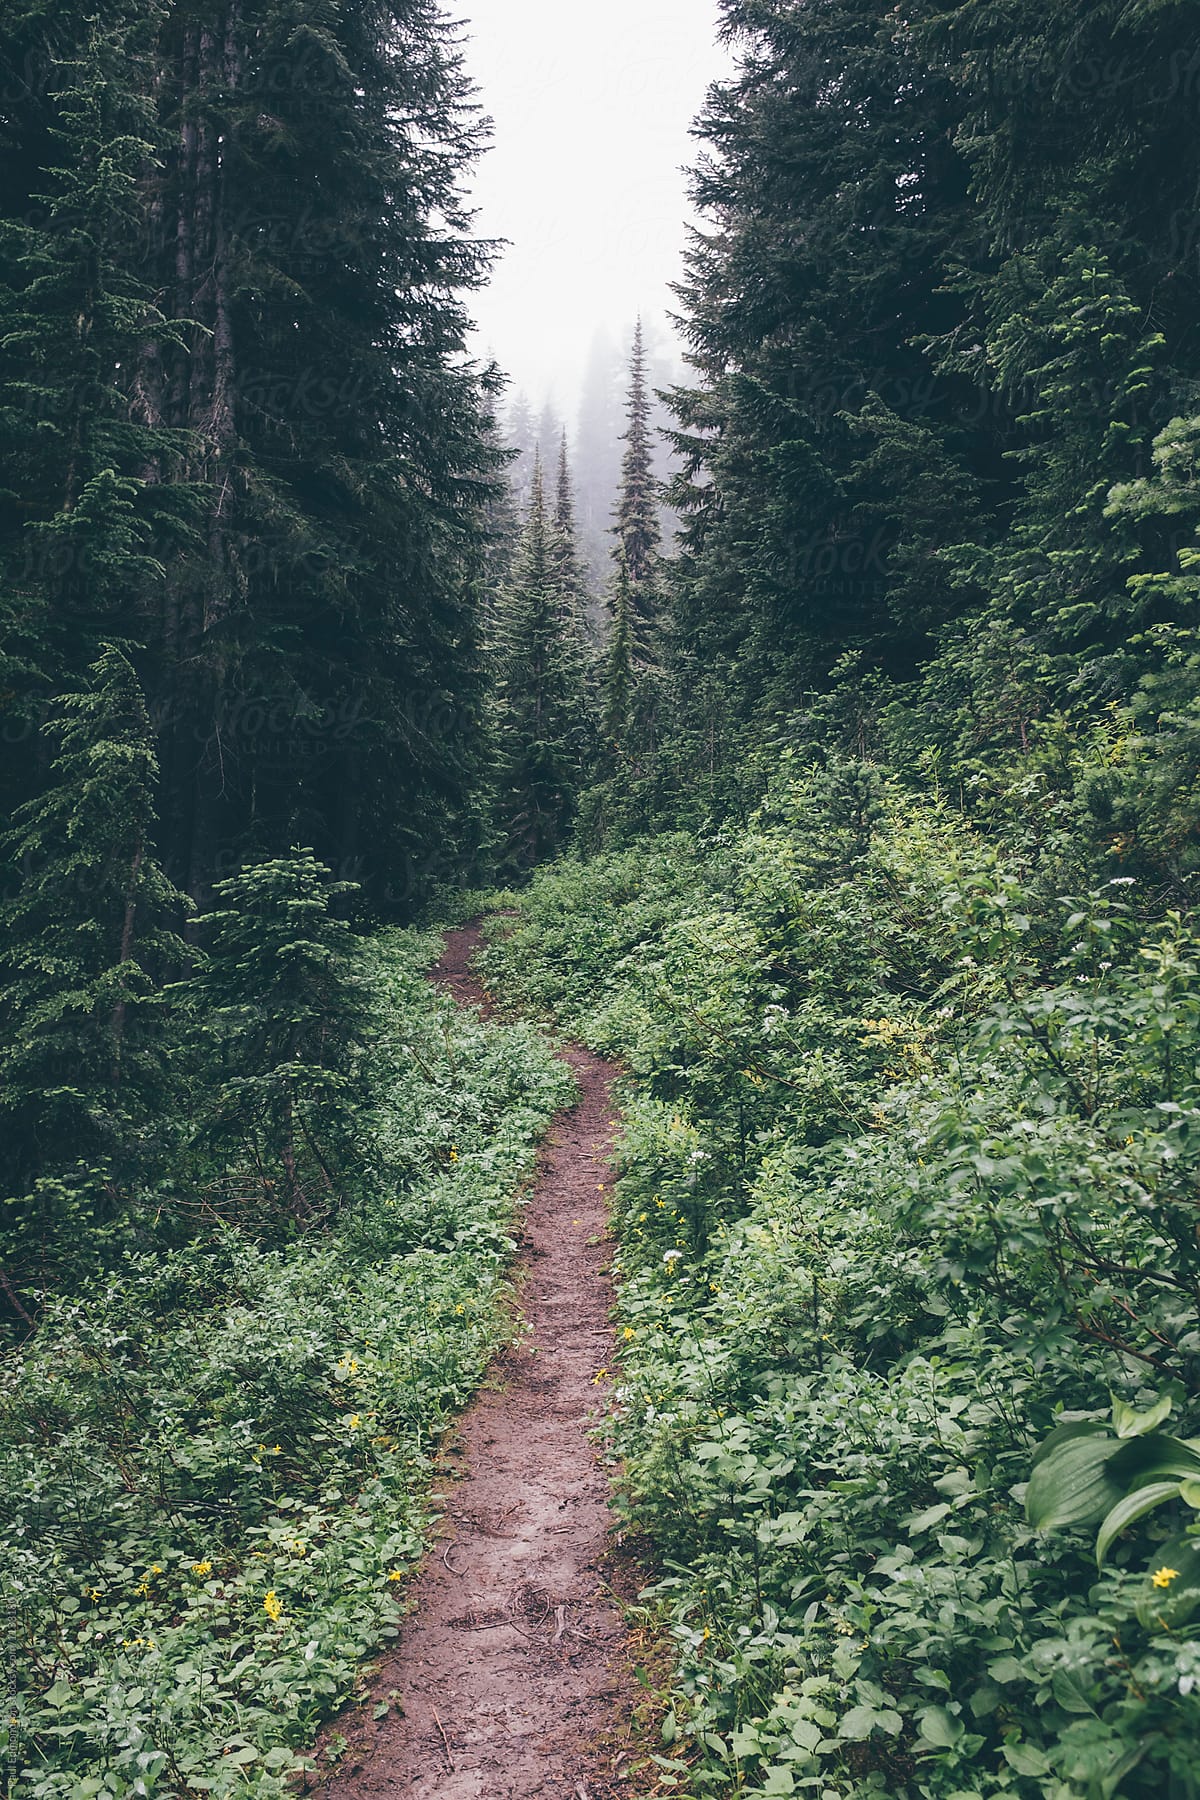 Hiking trail through forest, North Cascades, WA